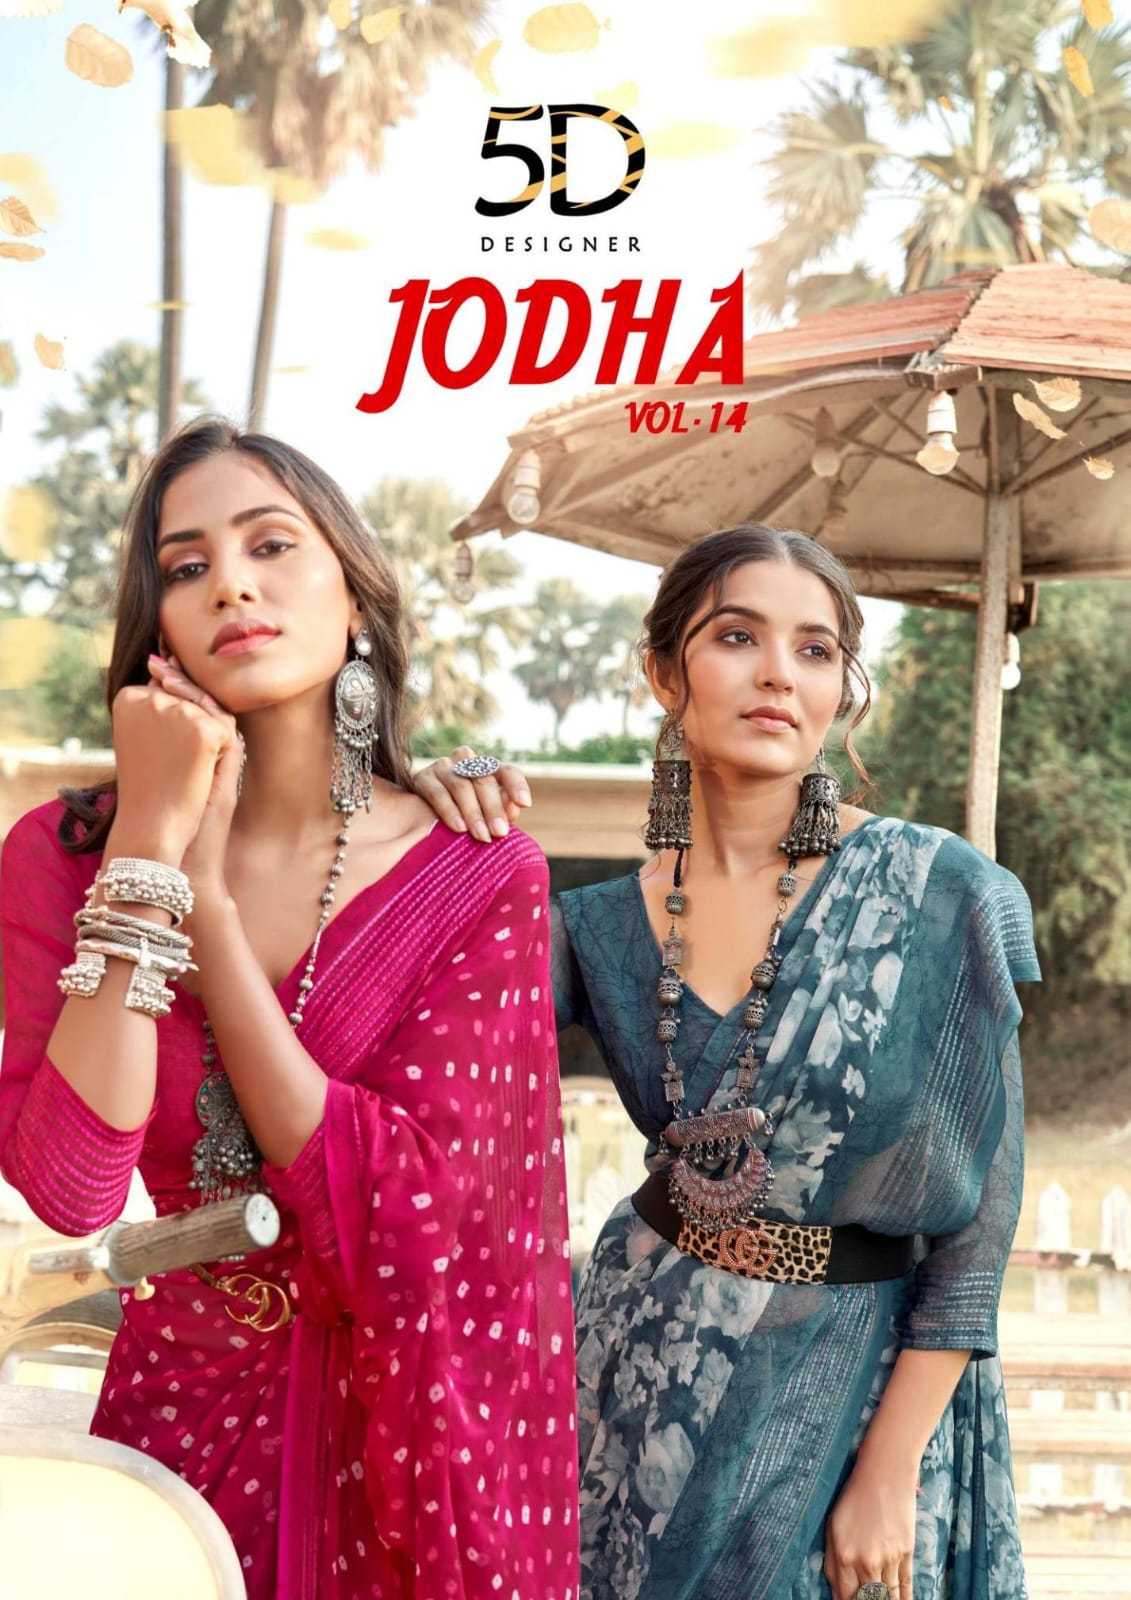 jodha vol 14 by 5d designer fancy casual georgette sarees